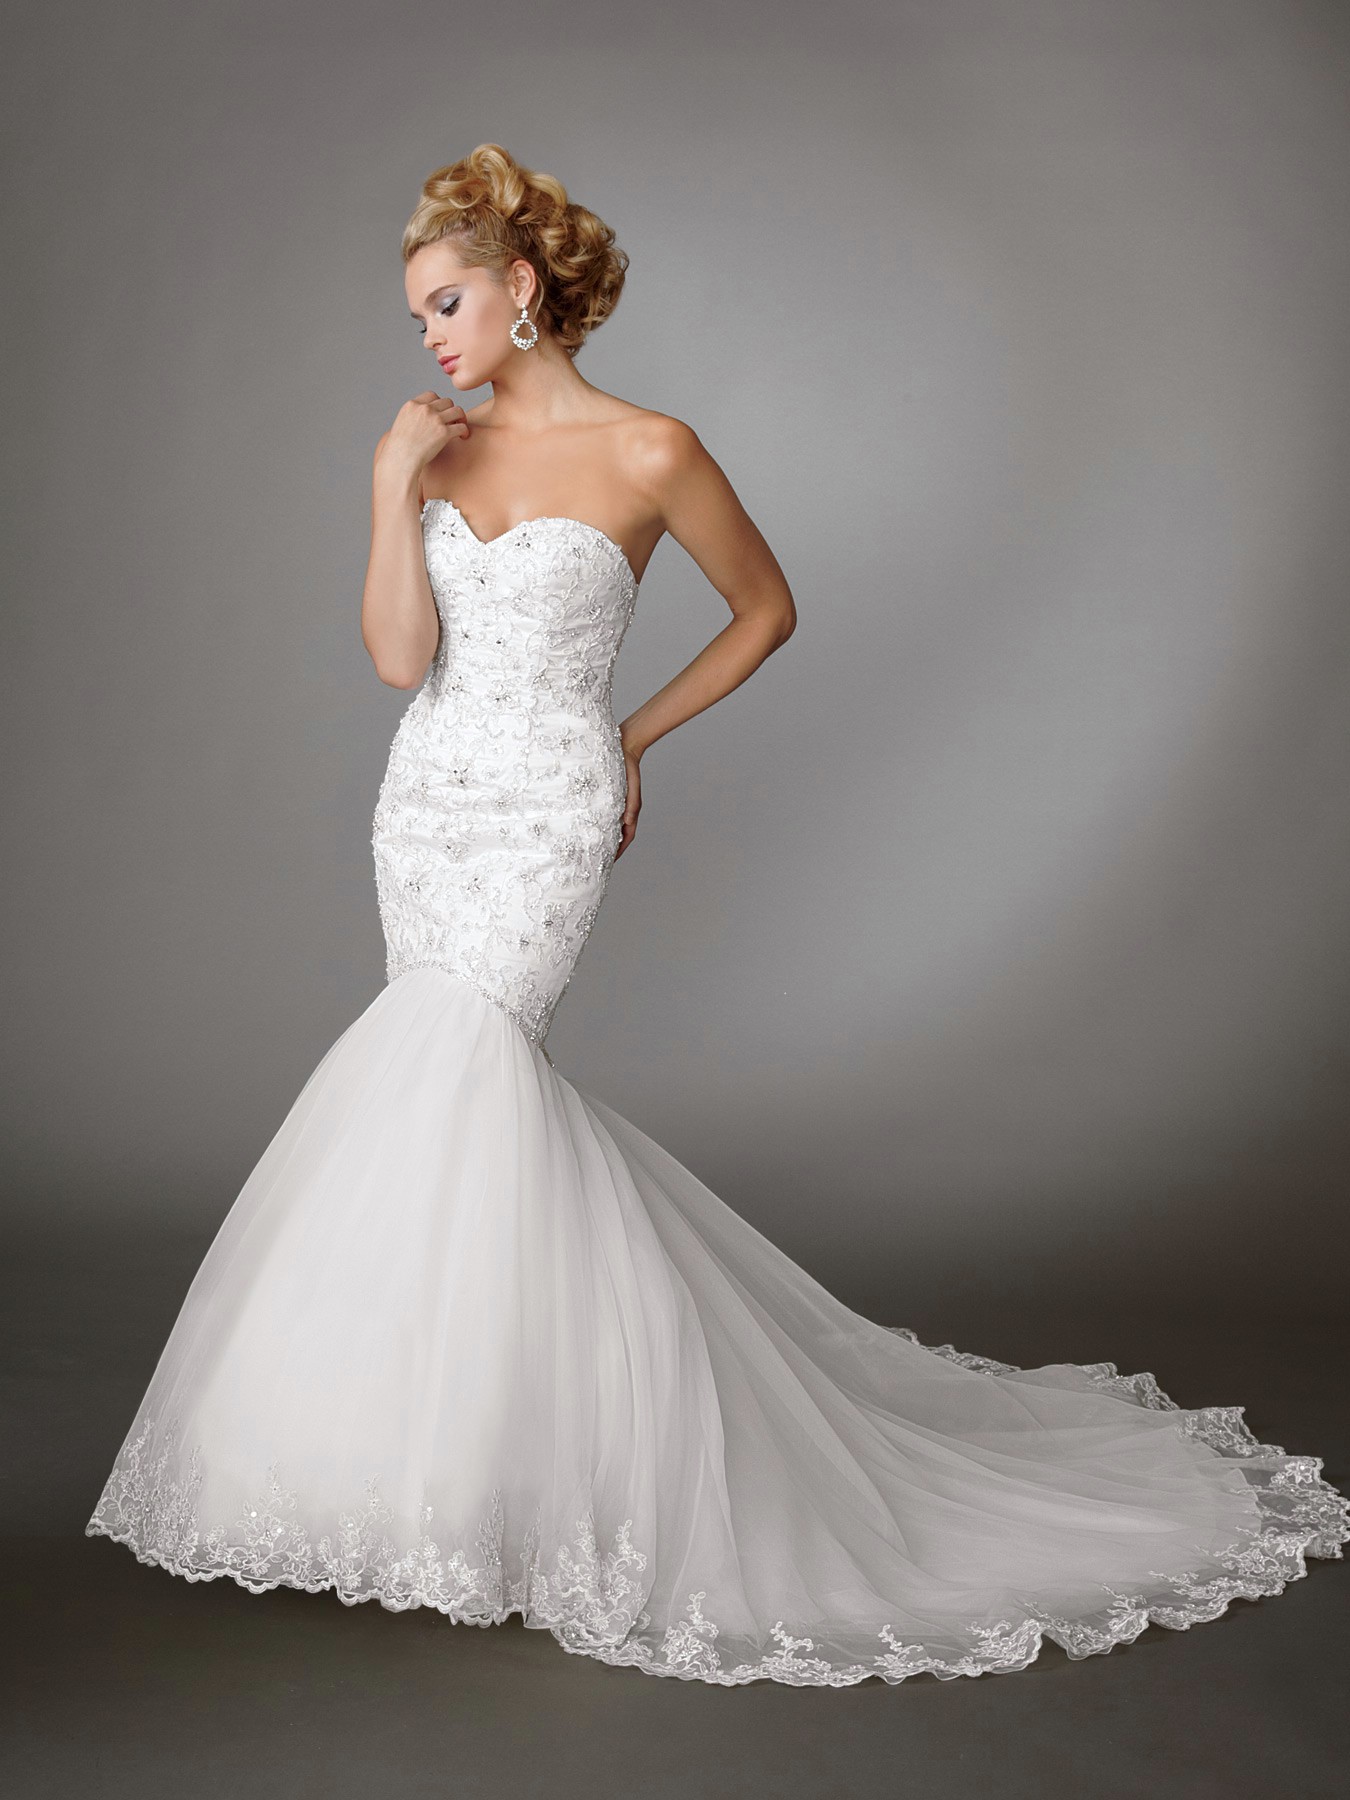 Mermaid Wedding Dresses An Elegant Choice For Brides 7981